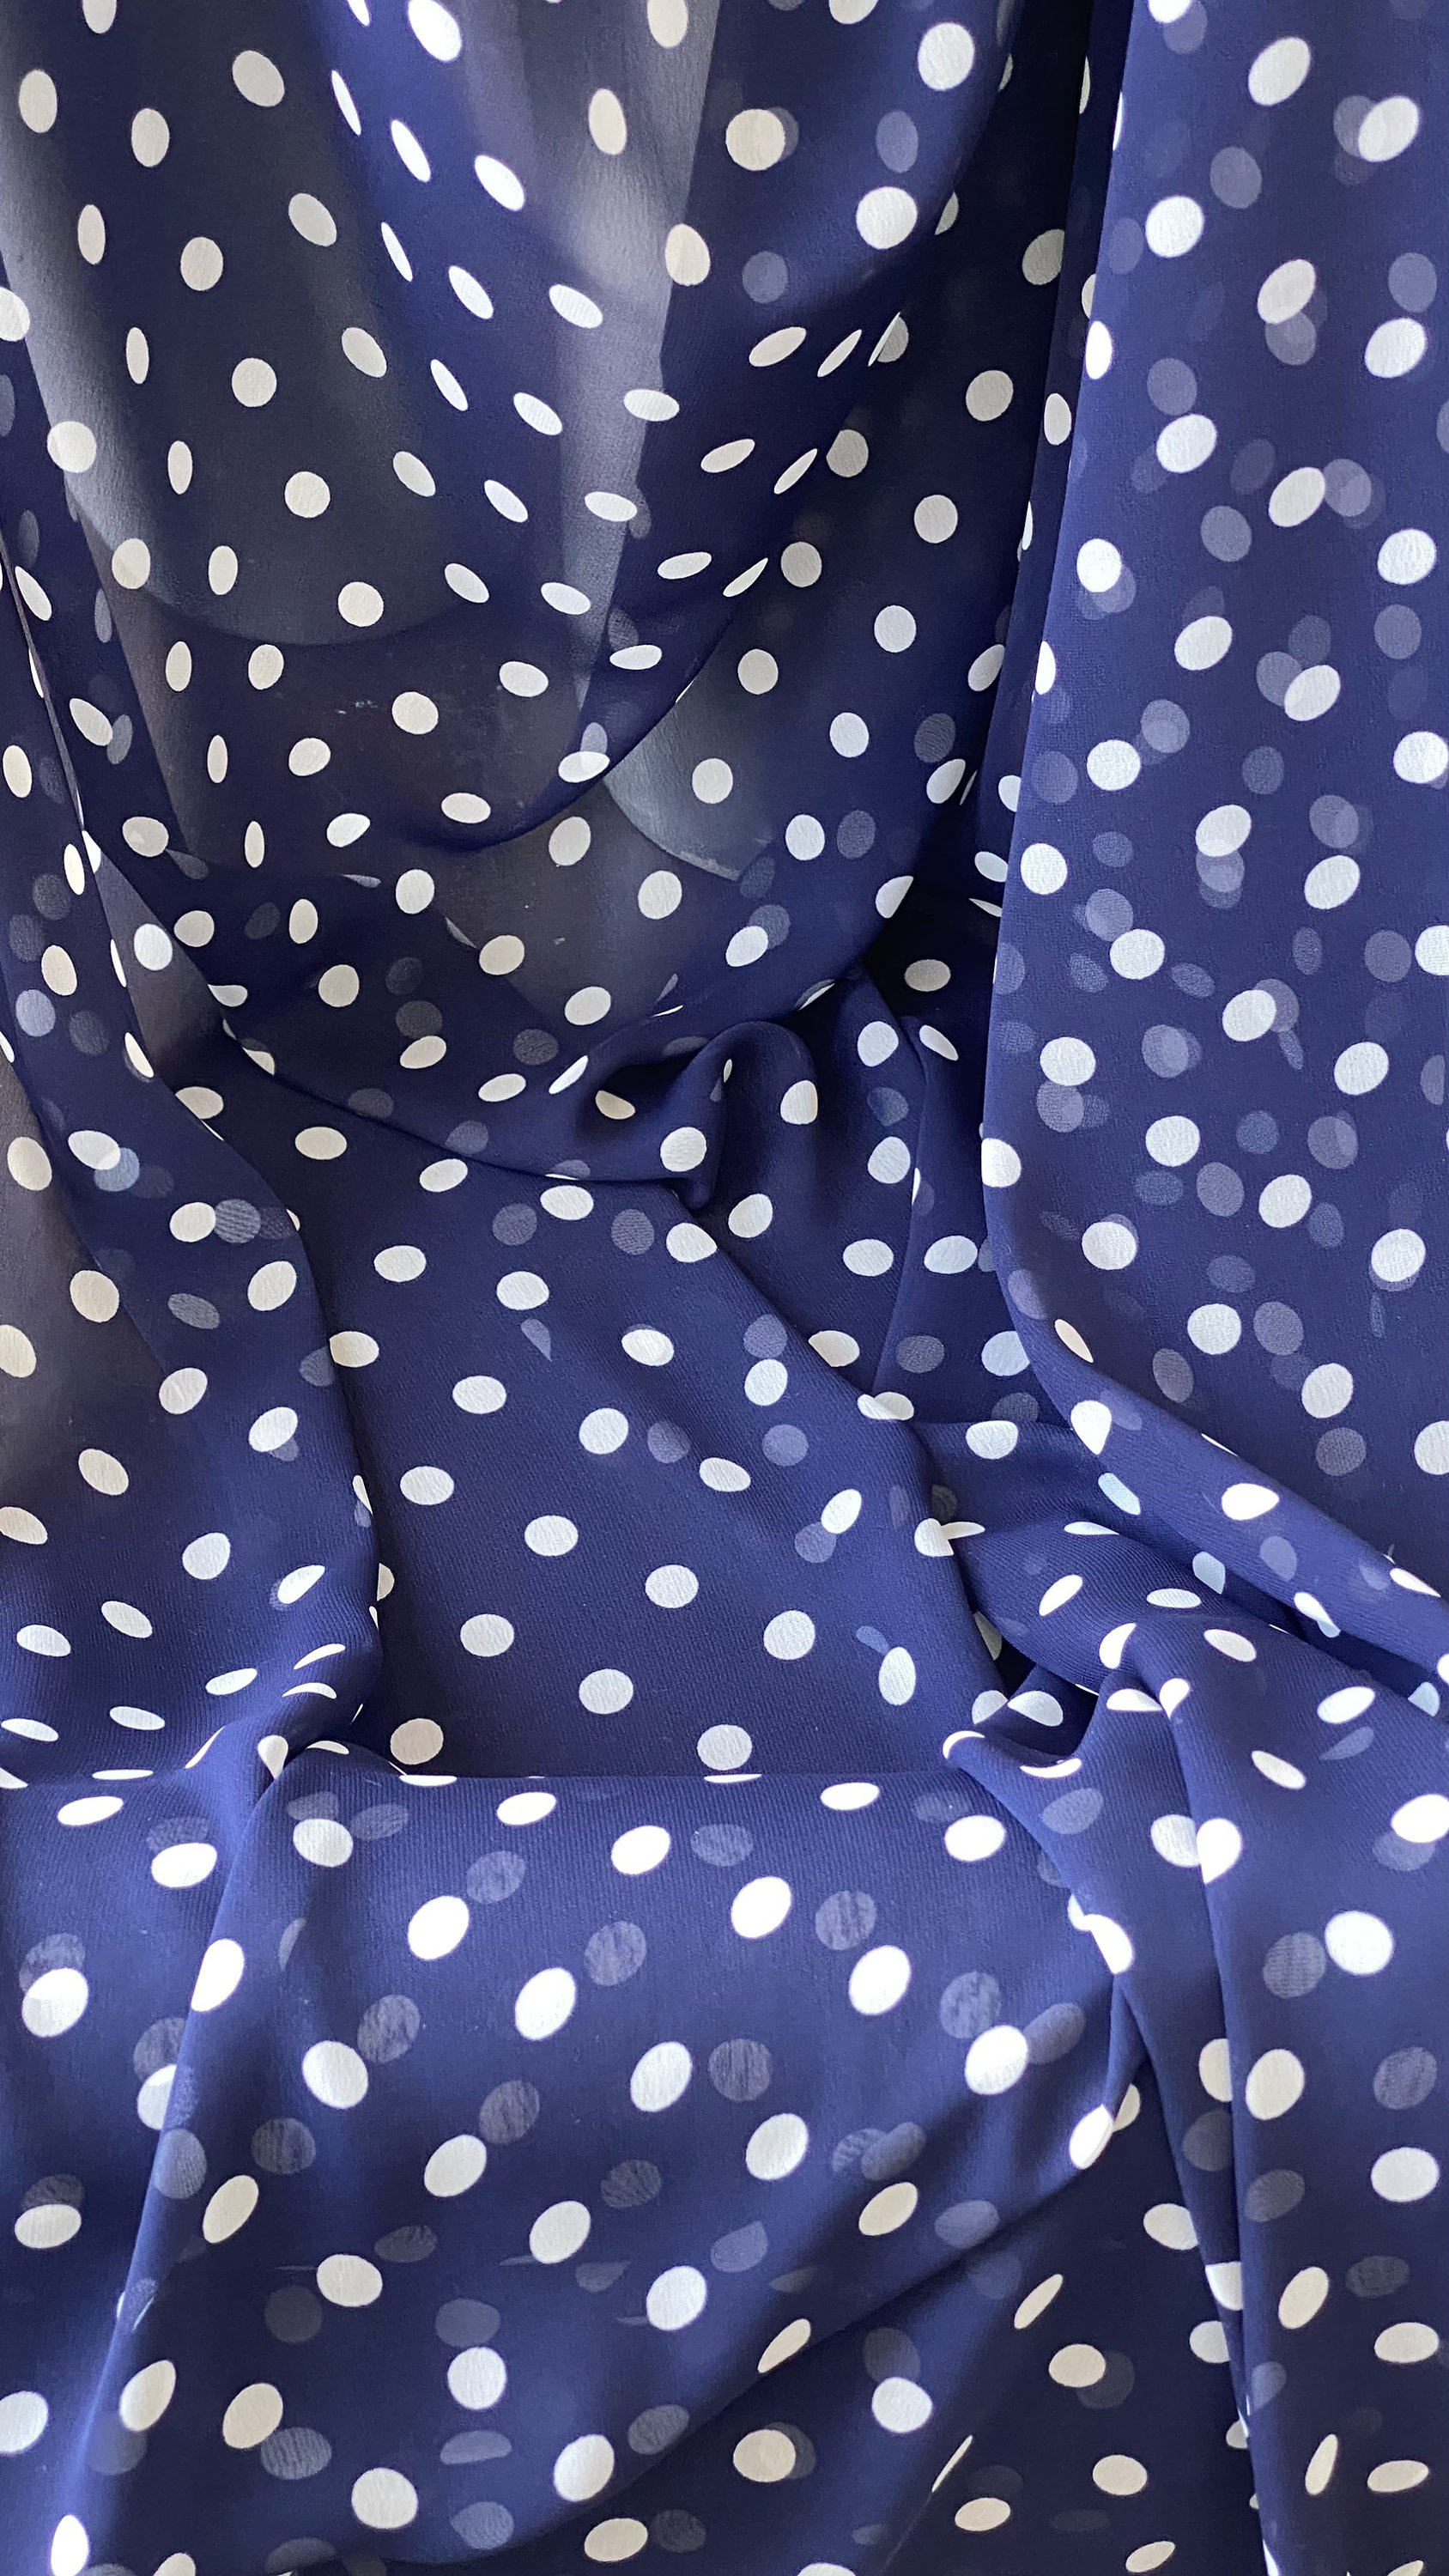 Polka Dot Chiffon Fabric Navy and White Spots Fabric, Polka Dot Transparent  Fabric Blue and White Polka Dot 